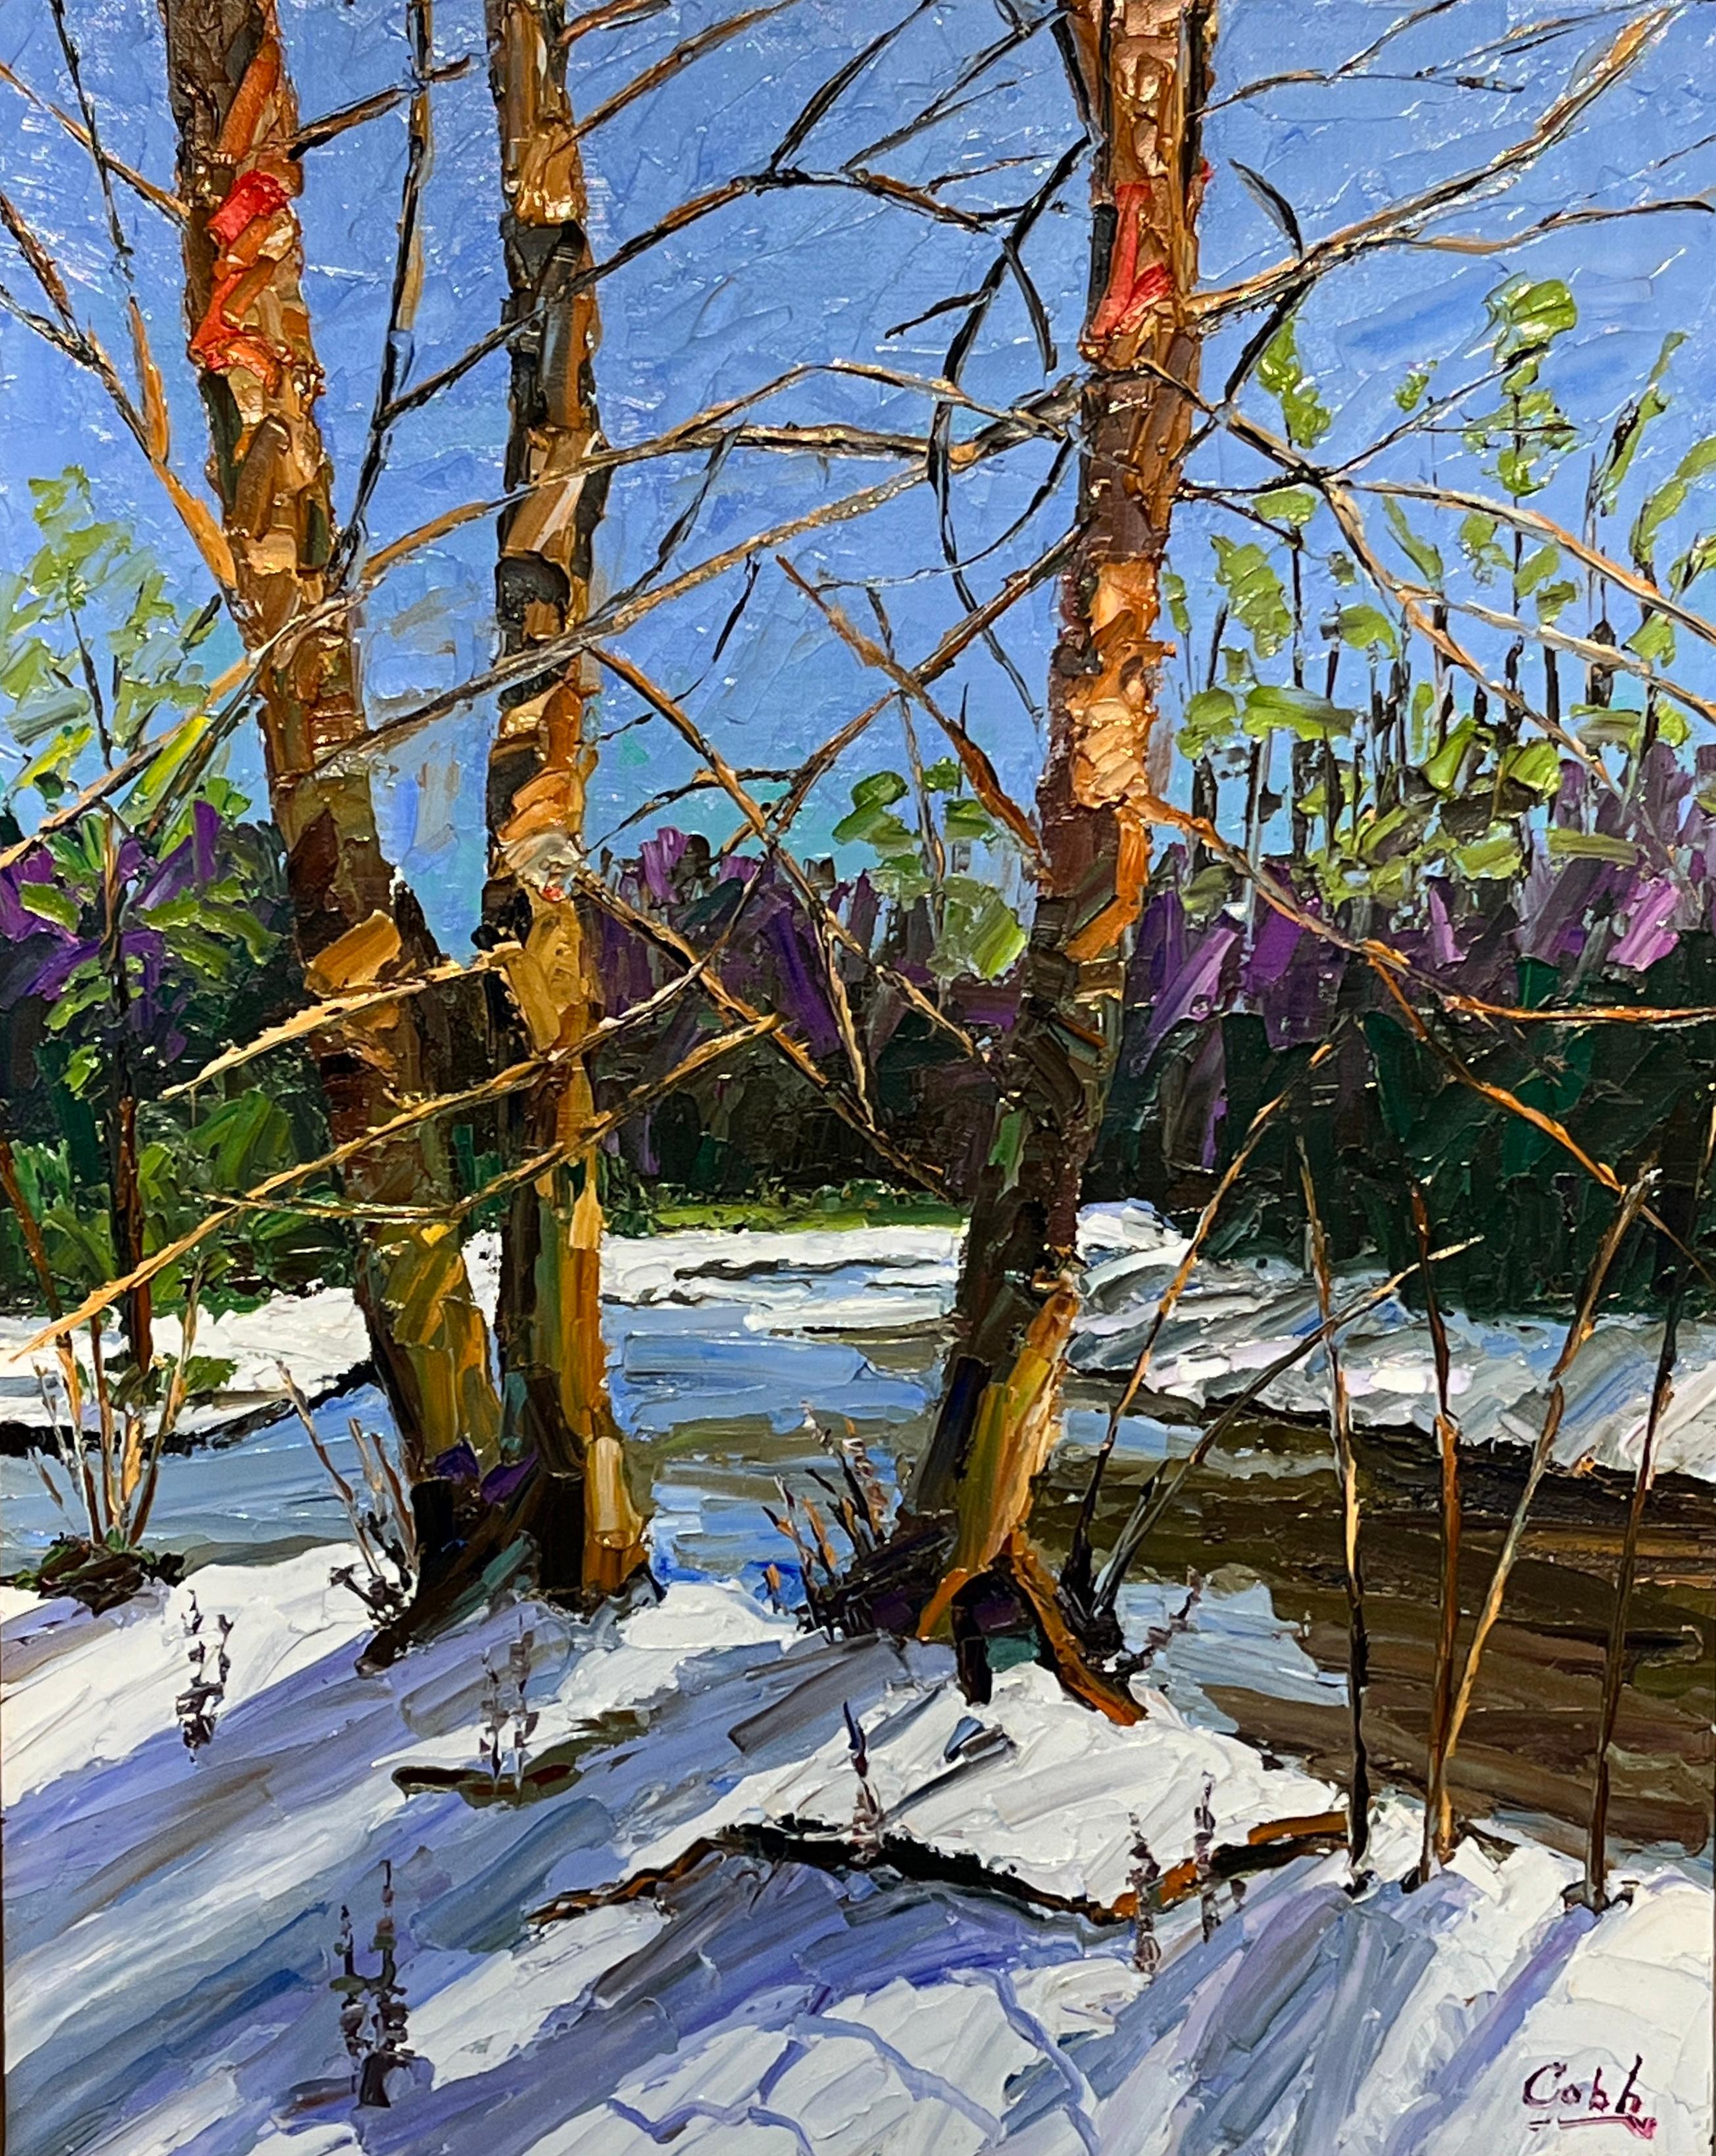 Jim Cobb Landscape Painting - 'River Birch' by James Cobb, Oil on Canvas Painting